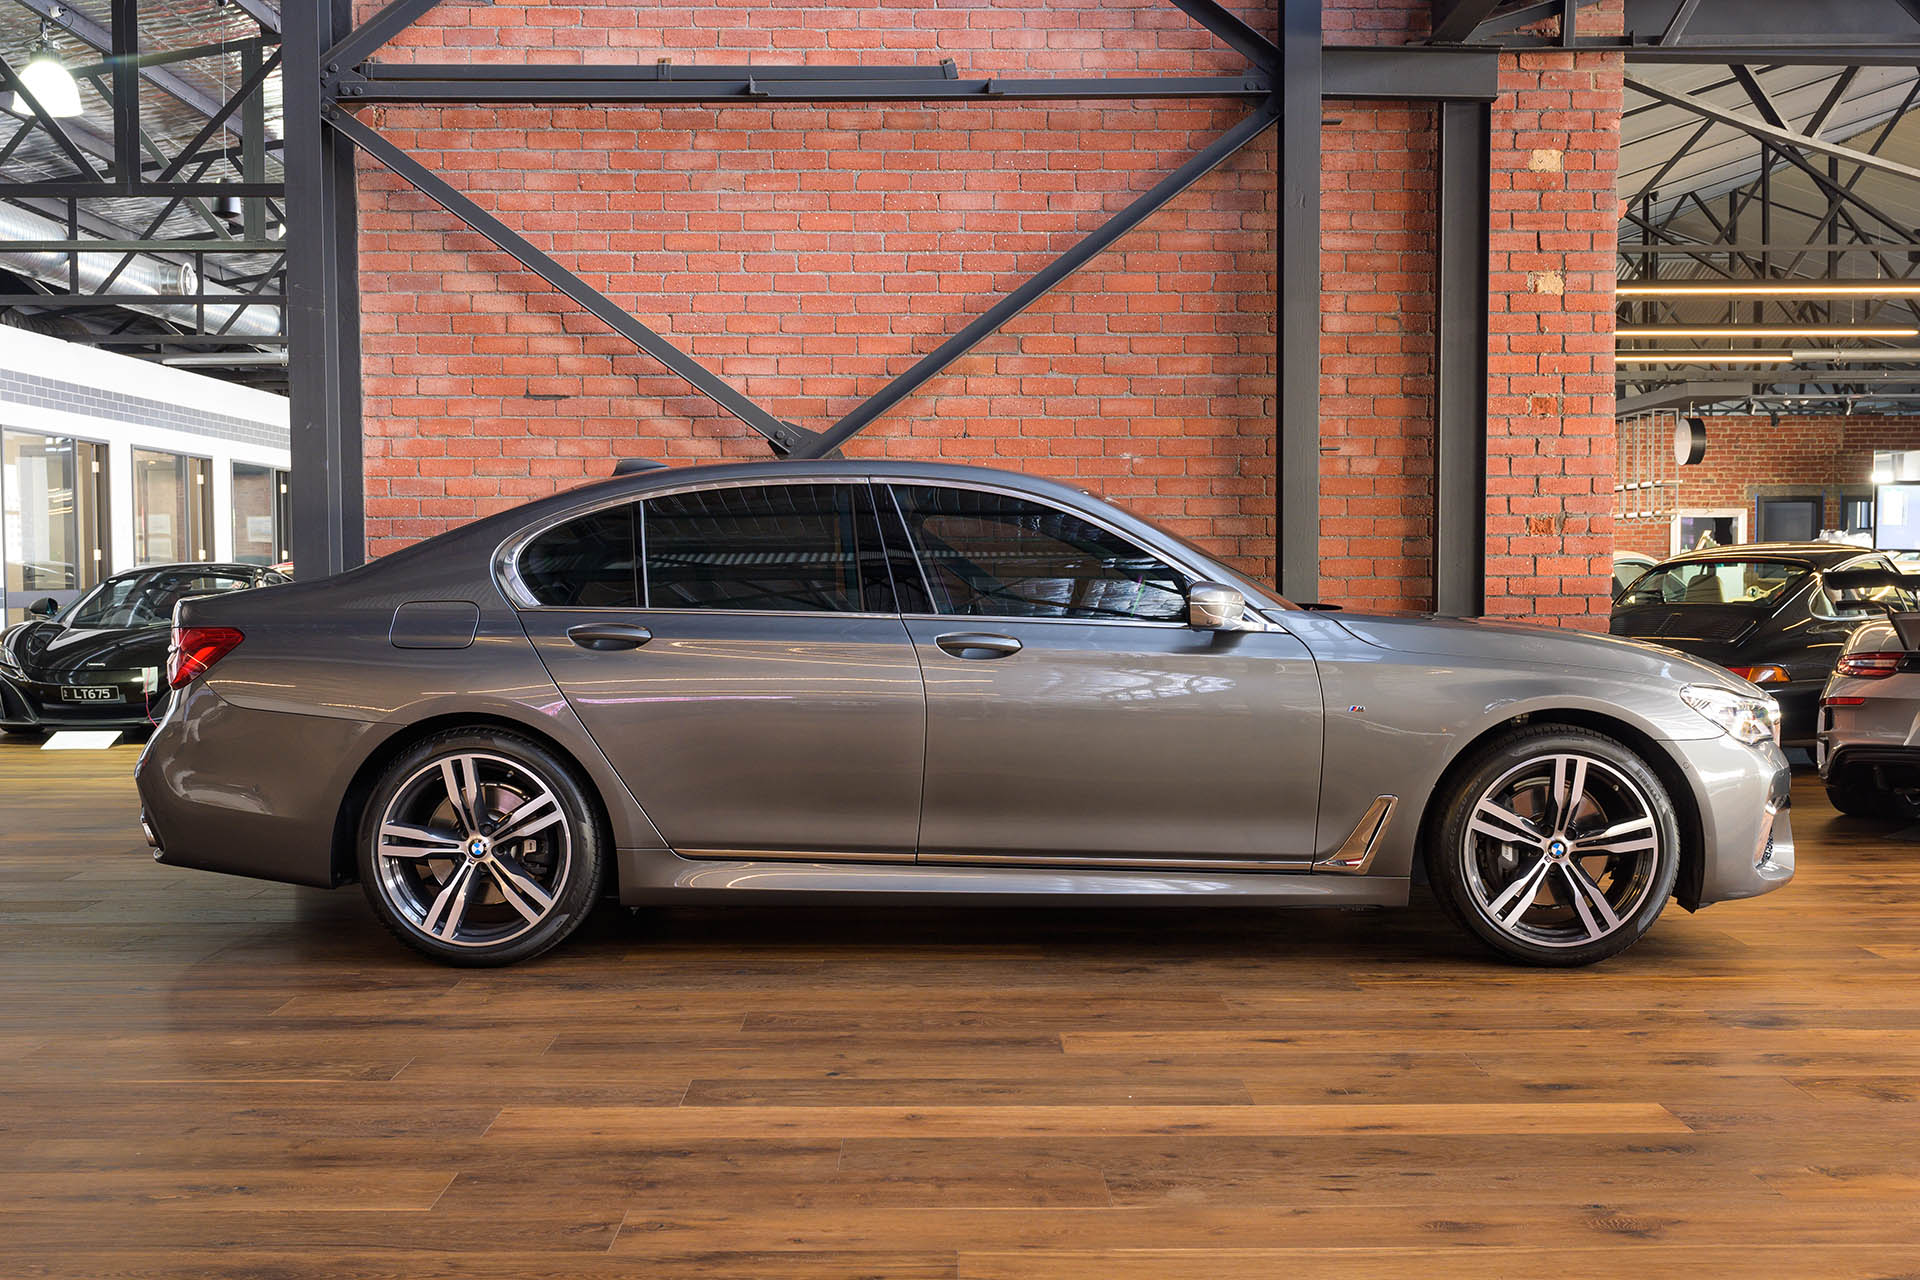 2016 BMW 740i Sedan - Richmonds - Classic and Prestige Cars - Storage